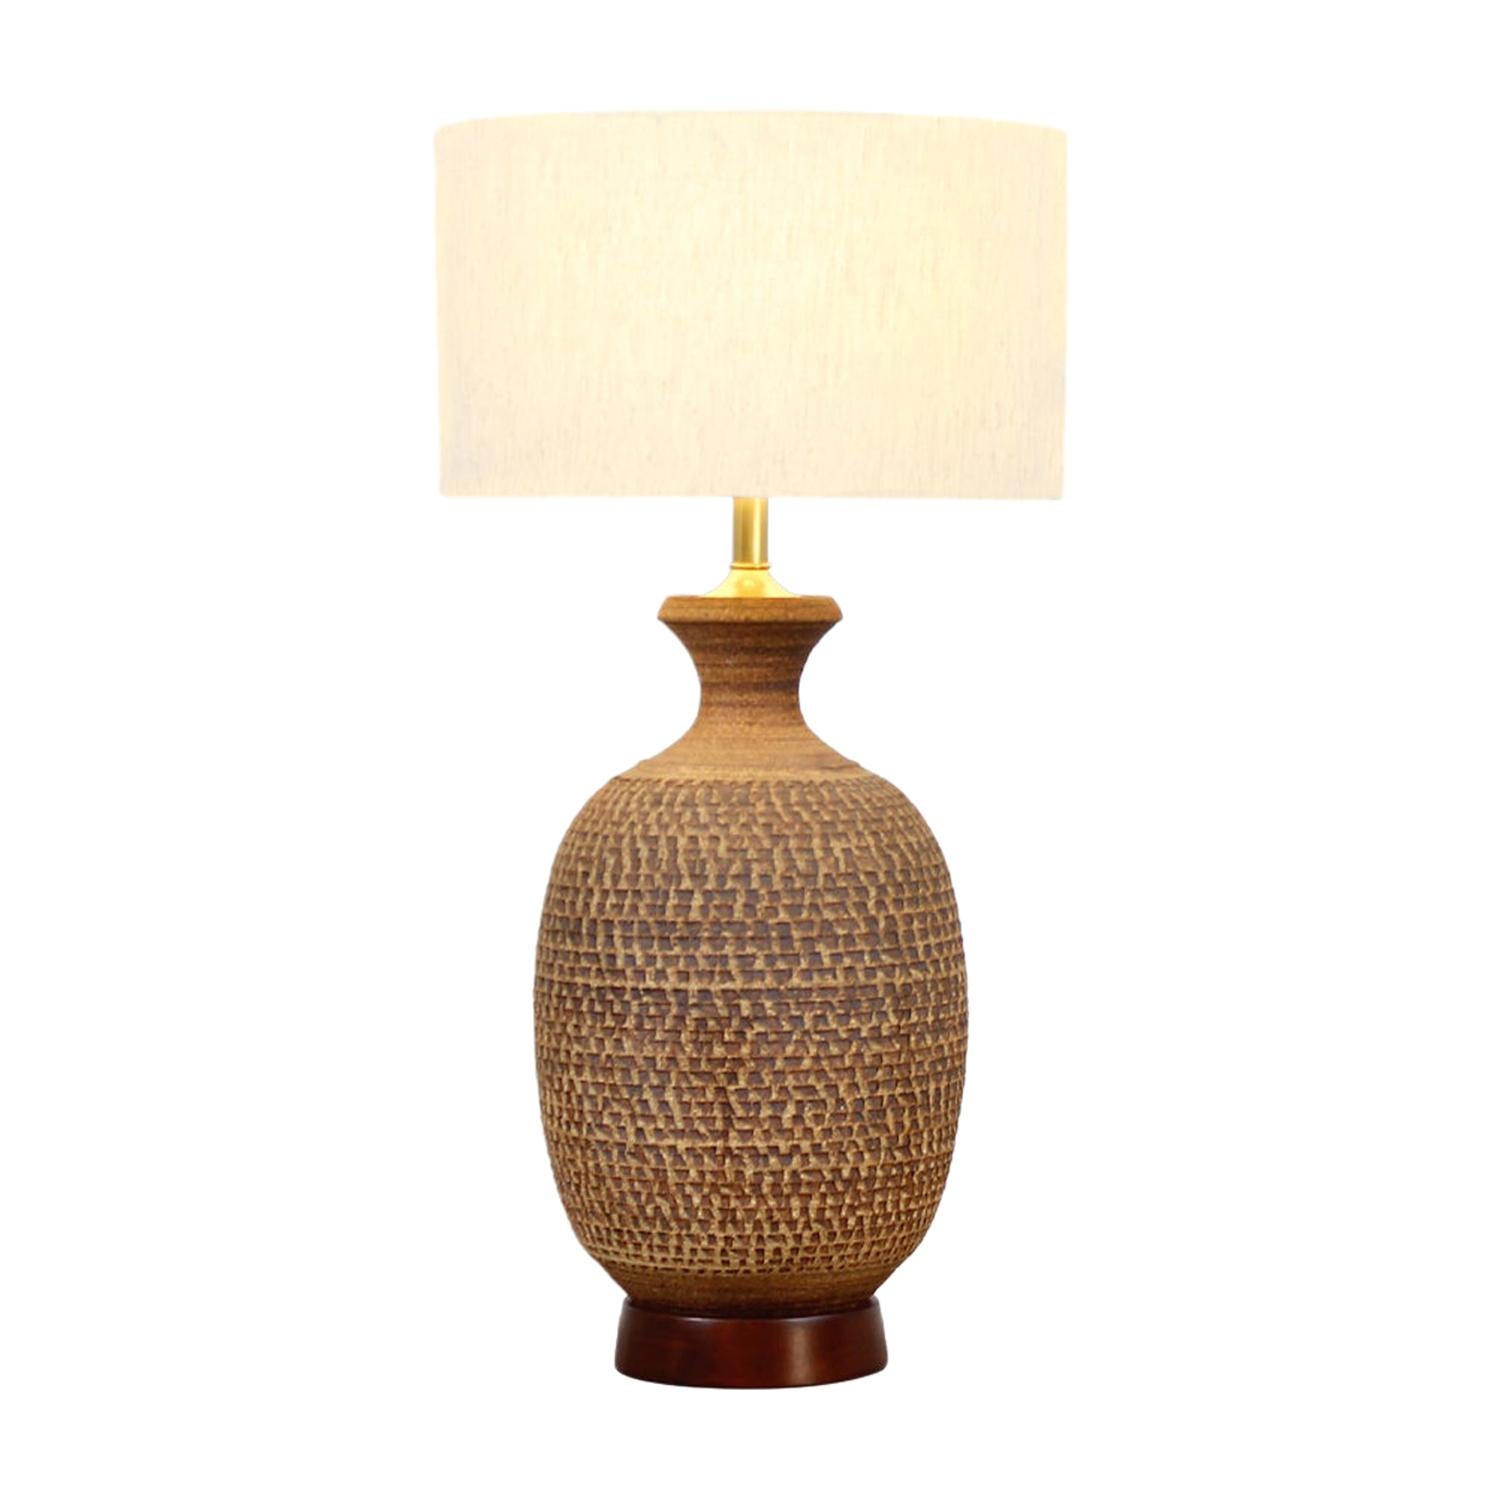 Bob Kinzie “Z-Series” Ceramic Table Lamp for Affiliated Craftsmen